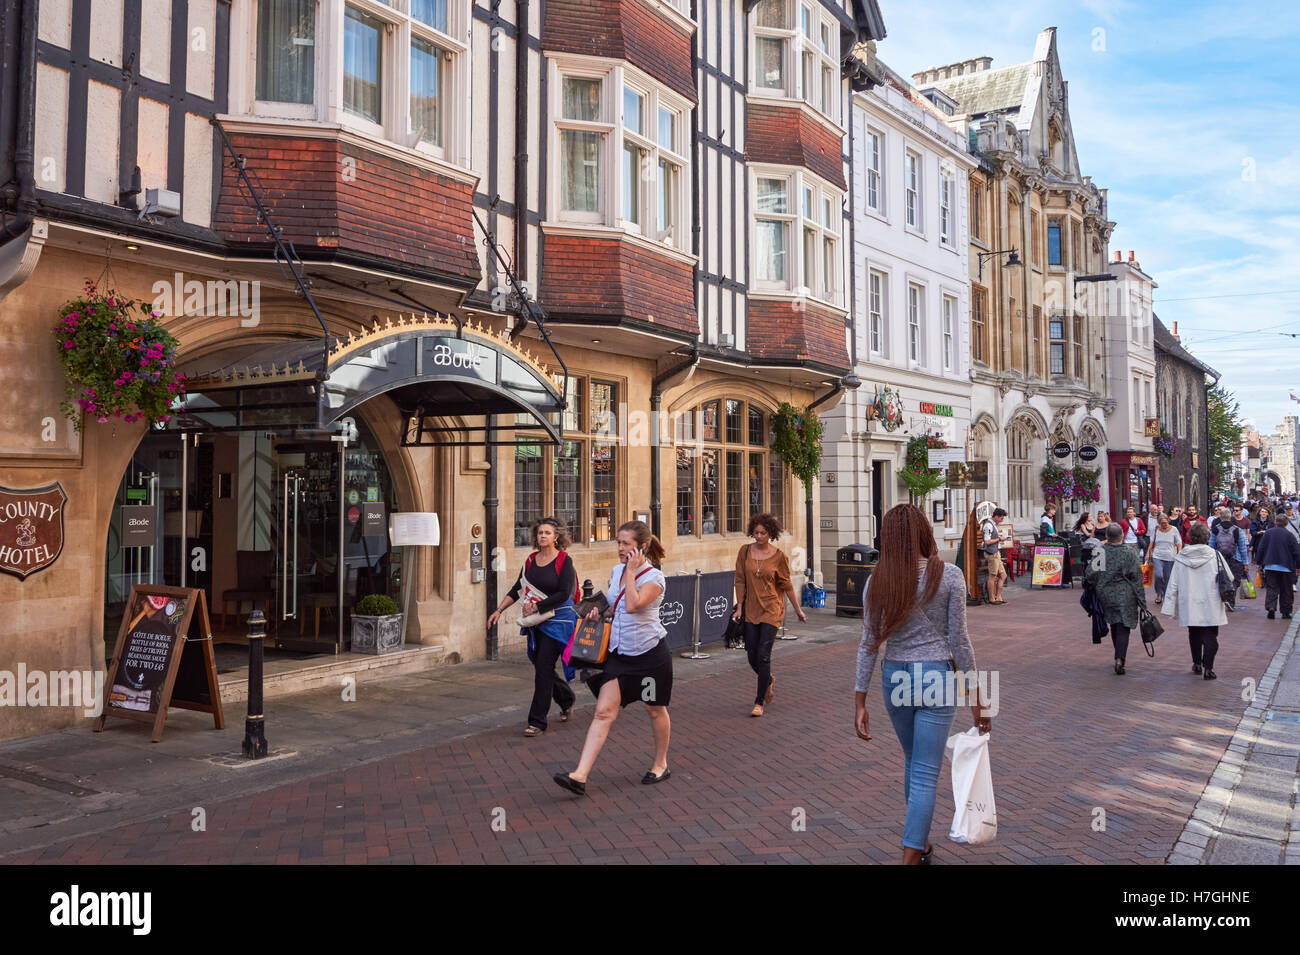 Shoppers on High Street in Canterbury Kent England United Kingdom UK Stock Photo